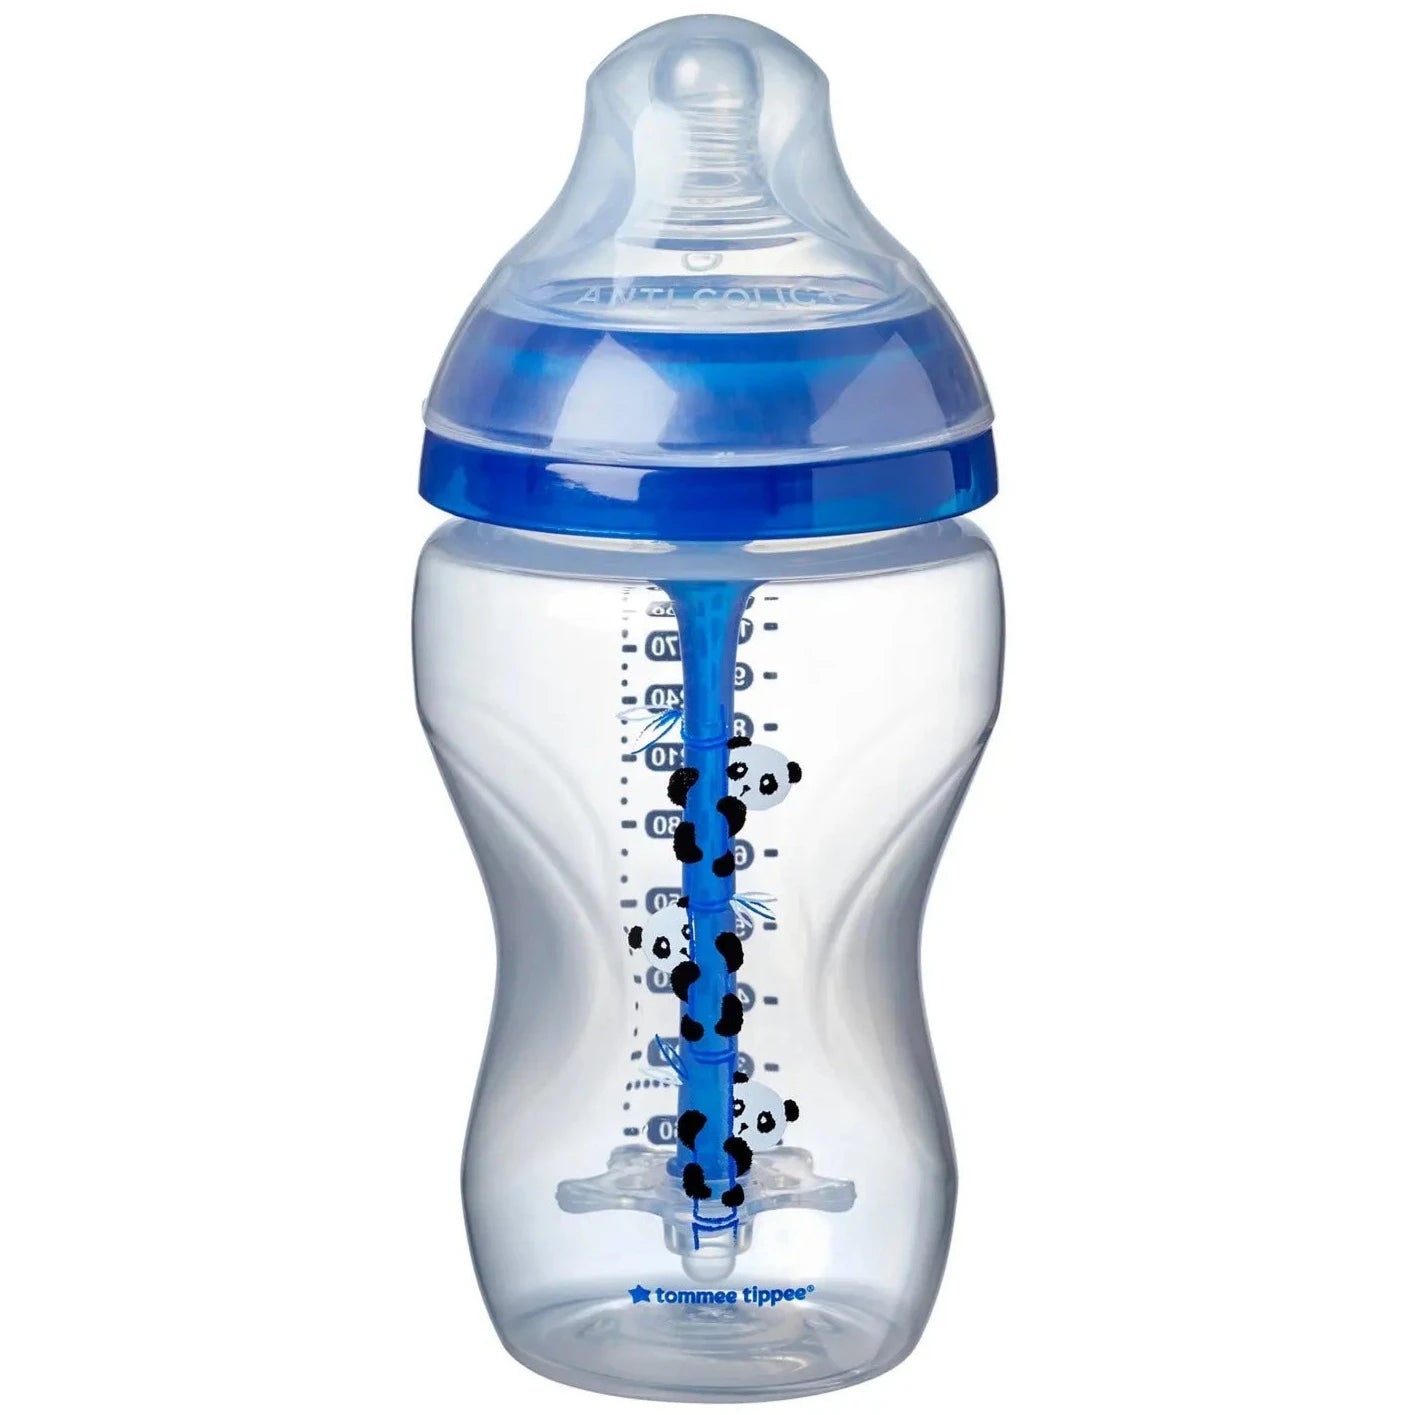 <tc>زجاجة رضاعة تومي تيبي المتطورة المضادة للمغص، 340 مل × 1 - للأولاد</tc>